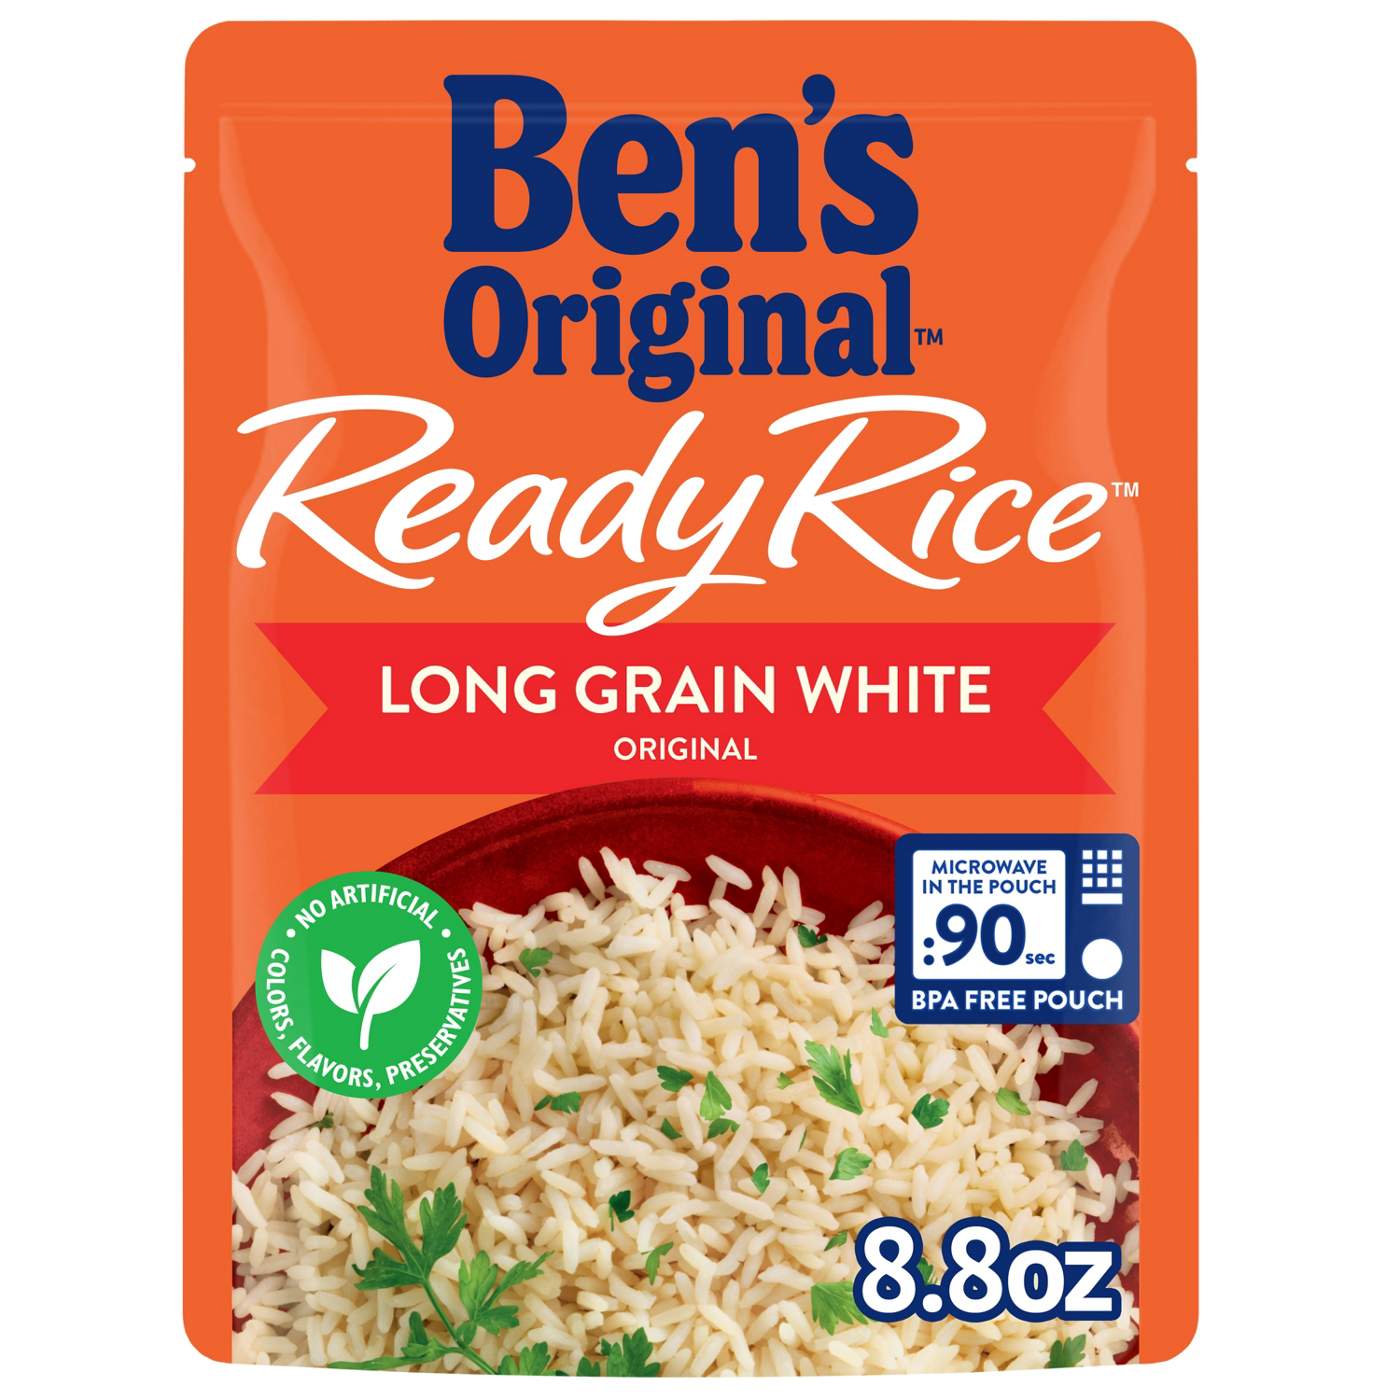 Ben's Original Ready Rice Original Long Grain White Rice; image 1 of 2